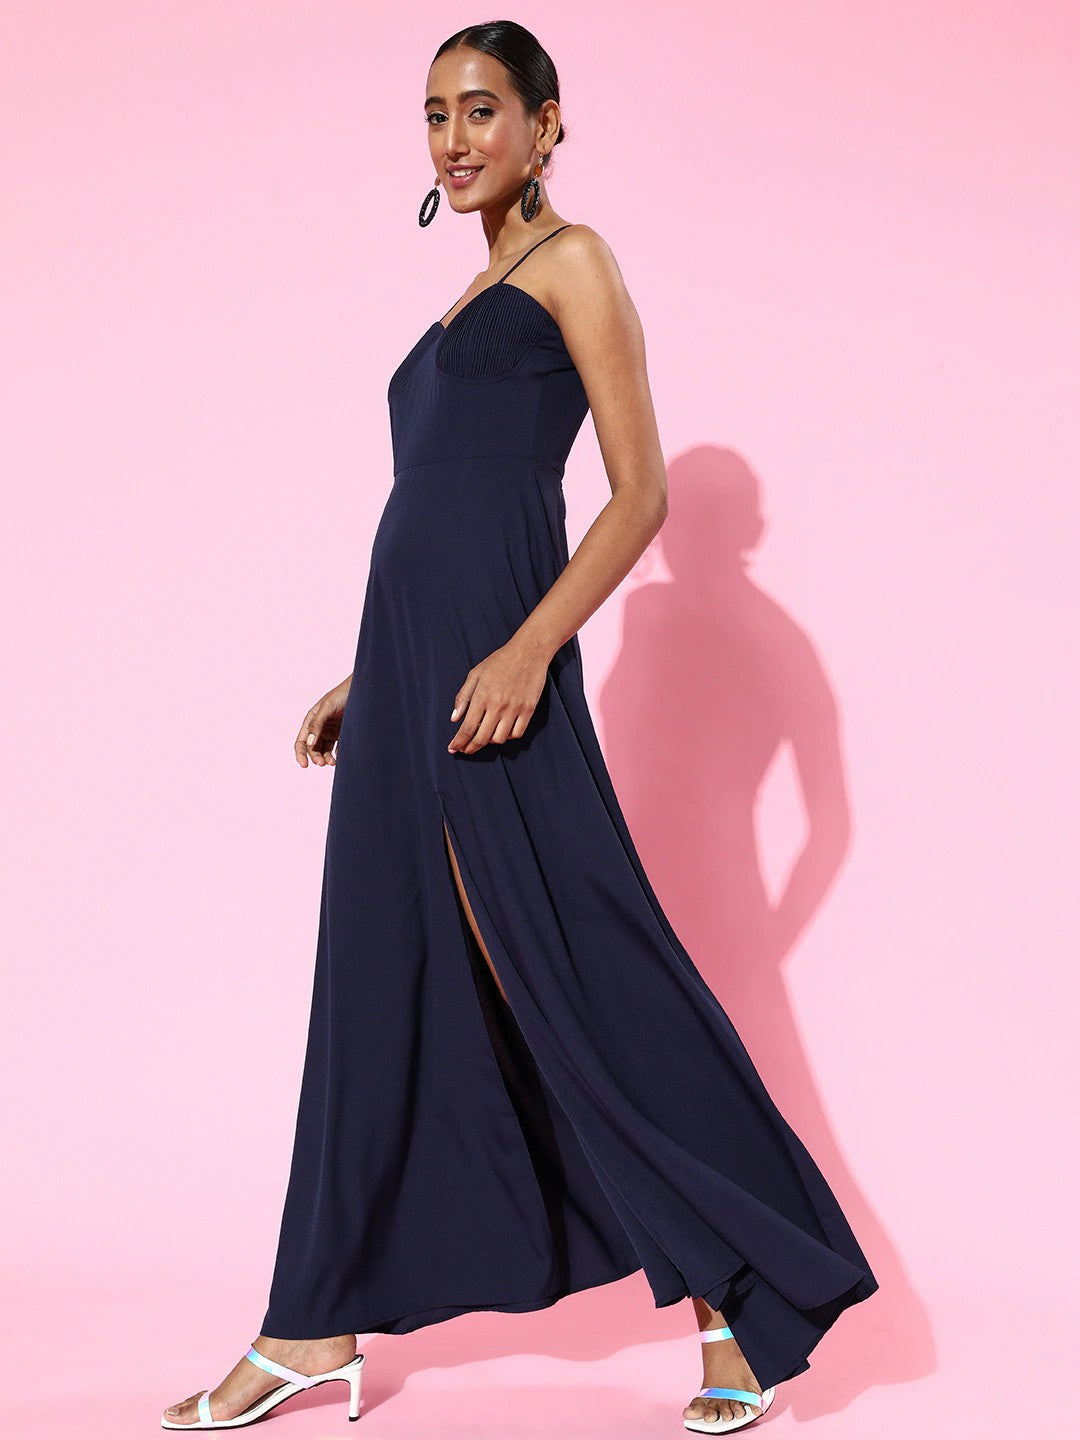 Berrylush Women Solid Navy Blue Sweetheart Neck Thigh-High Slit Flared Maxi Dress